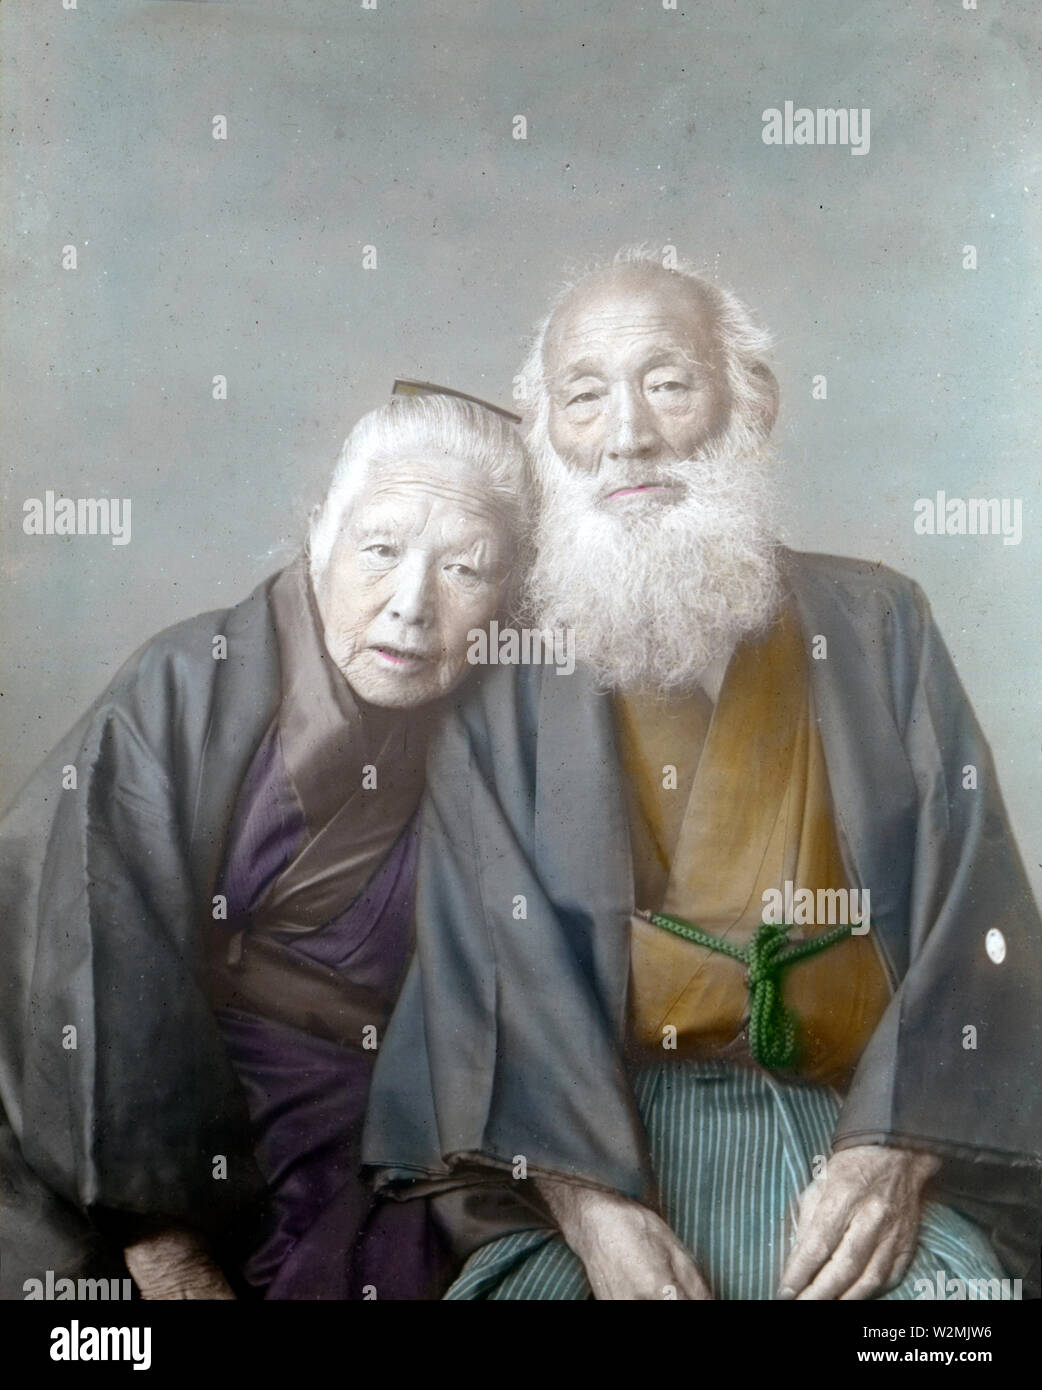 [1900s Japan - Ältere japanisches Paar] - Charmantes Porträt eines älteren Paares. 20. Jahrhundert vintage Glas schieben. Stockfoto